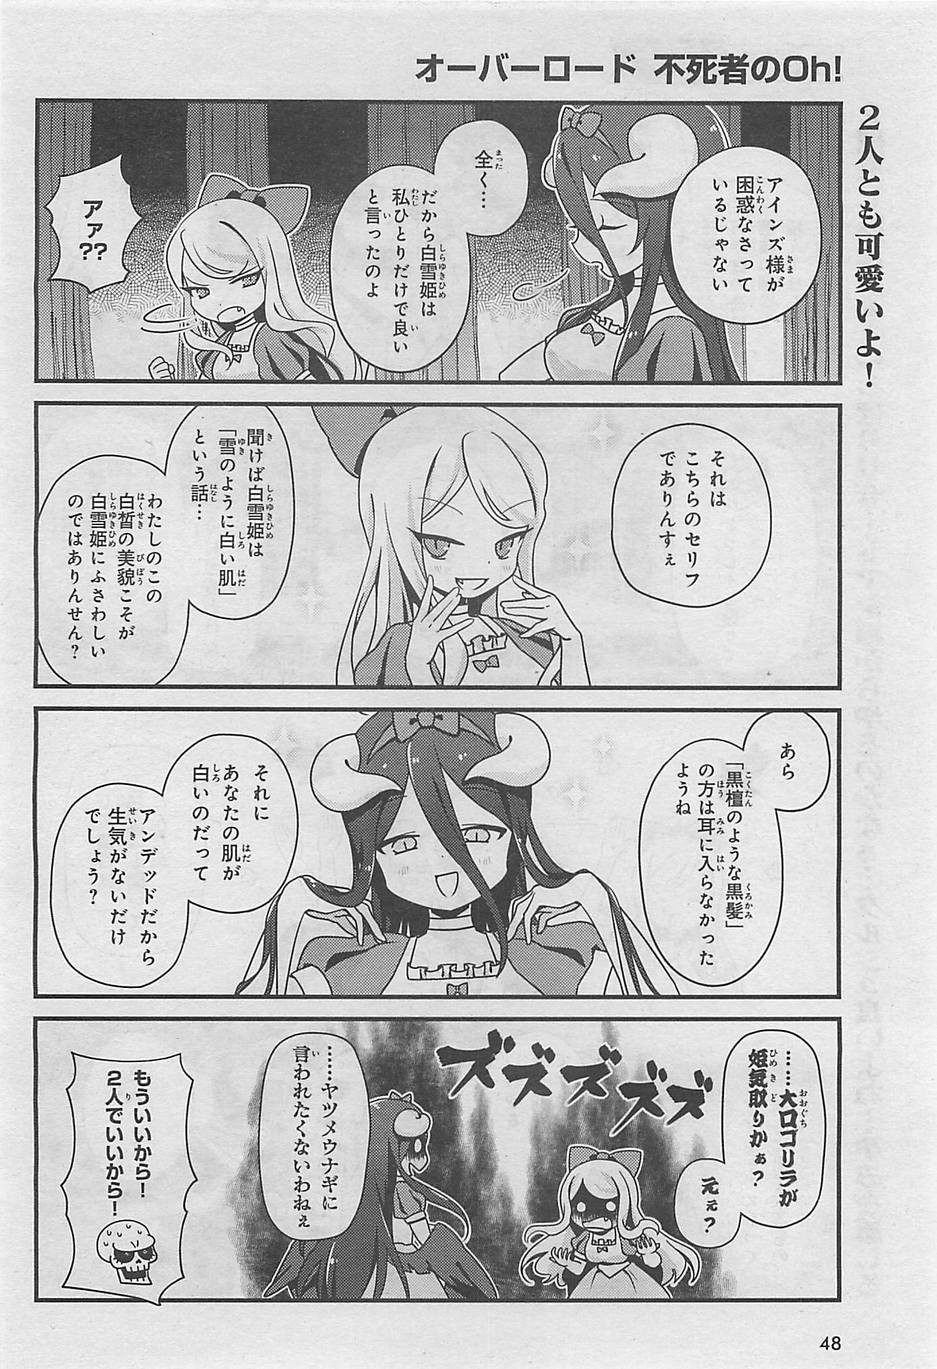 Overlord-Fushisha-no-Oh - Chapter 03 - Page 4